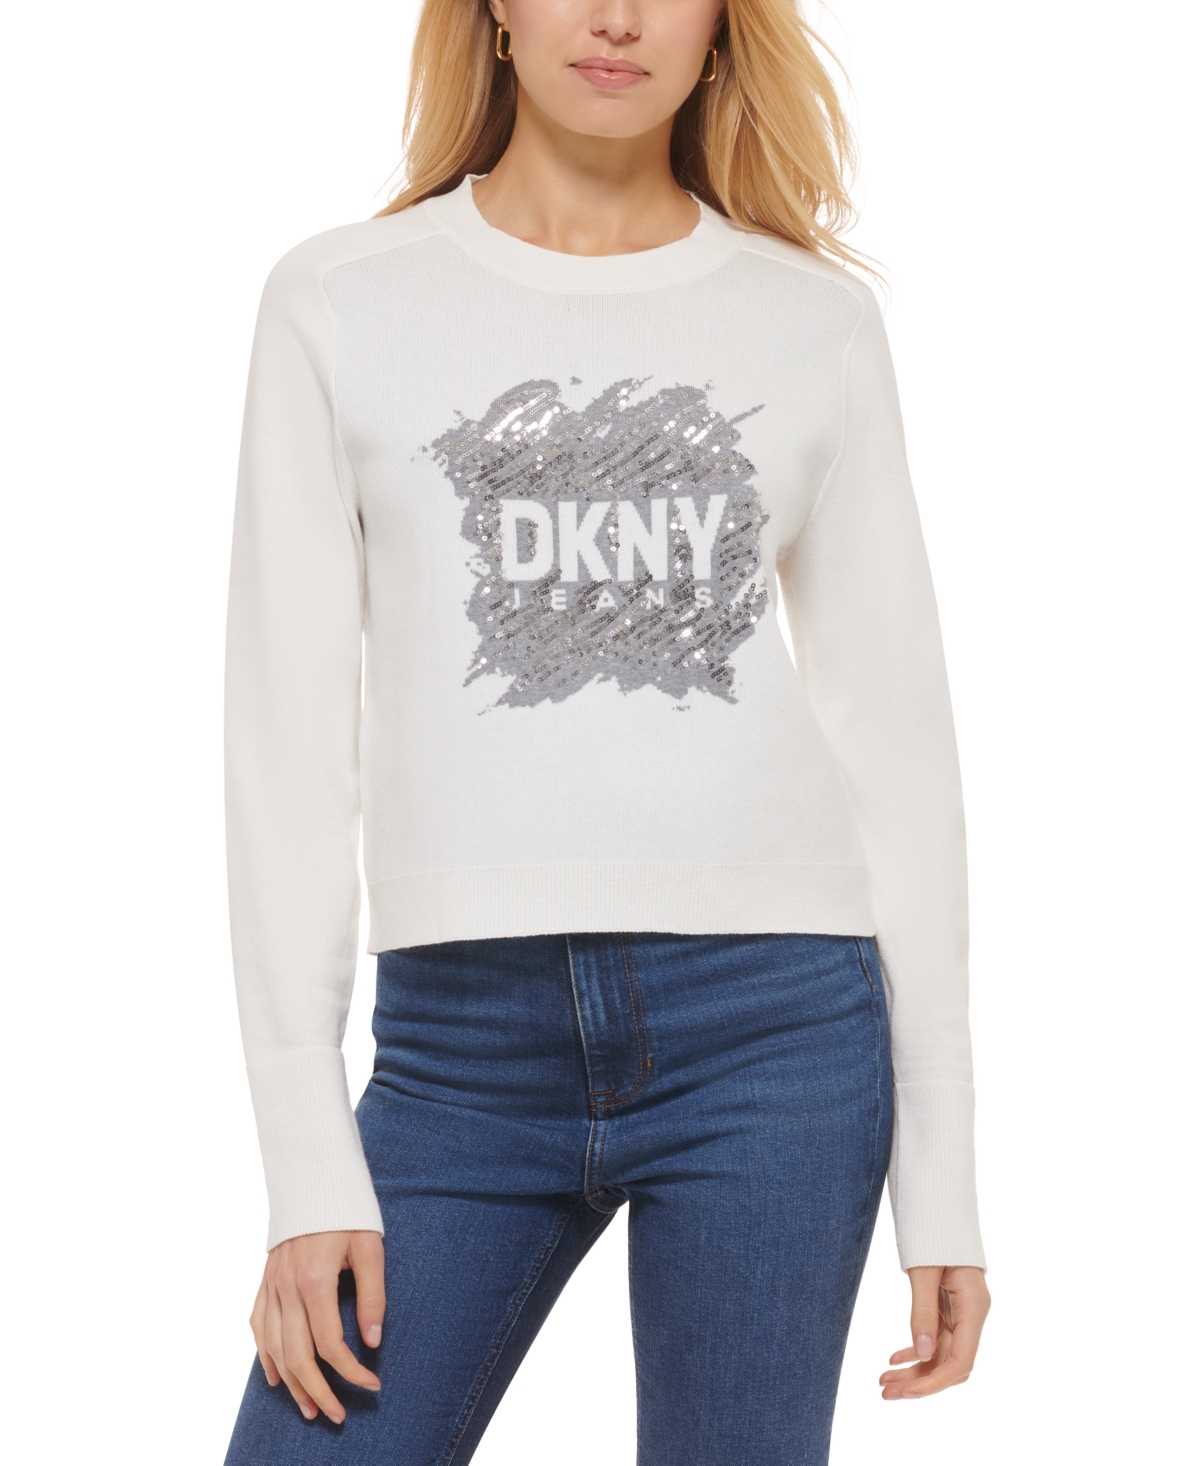 Dkny Jeans Women's Sequin Logo Crewneck Sweater